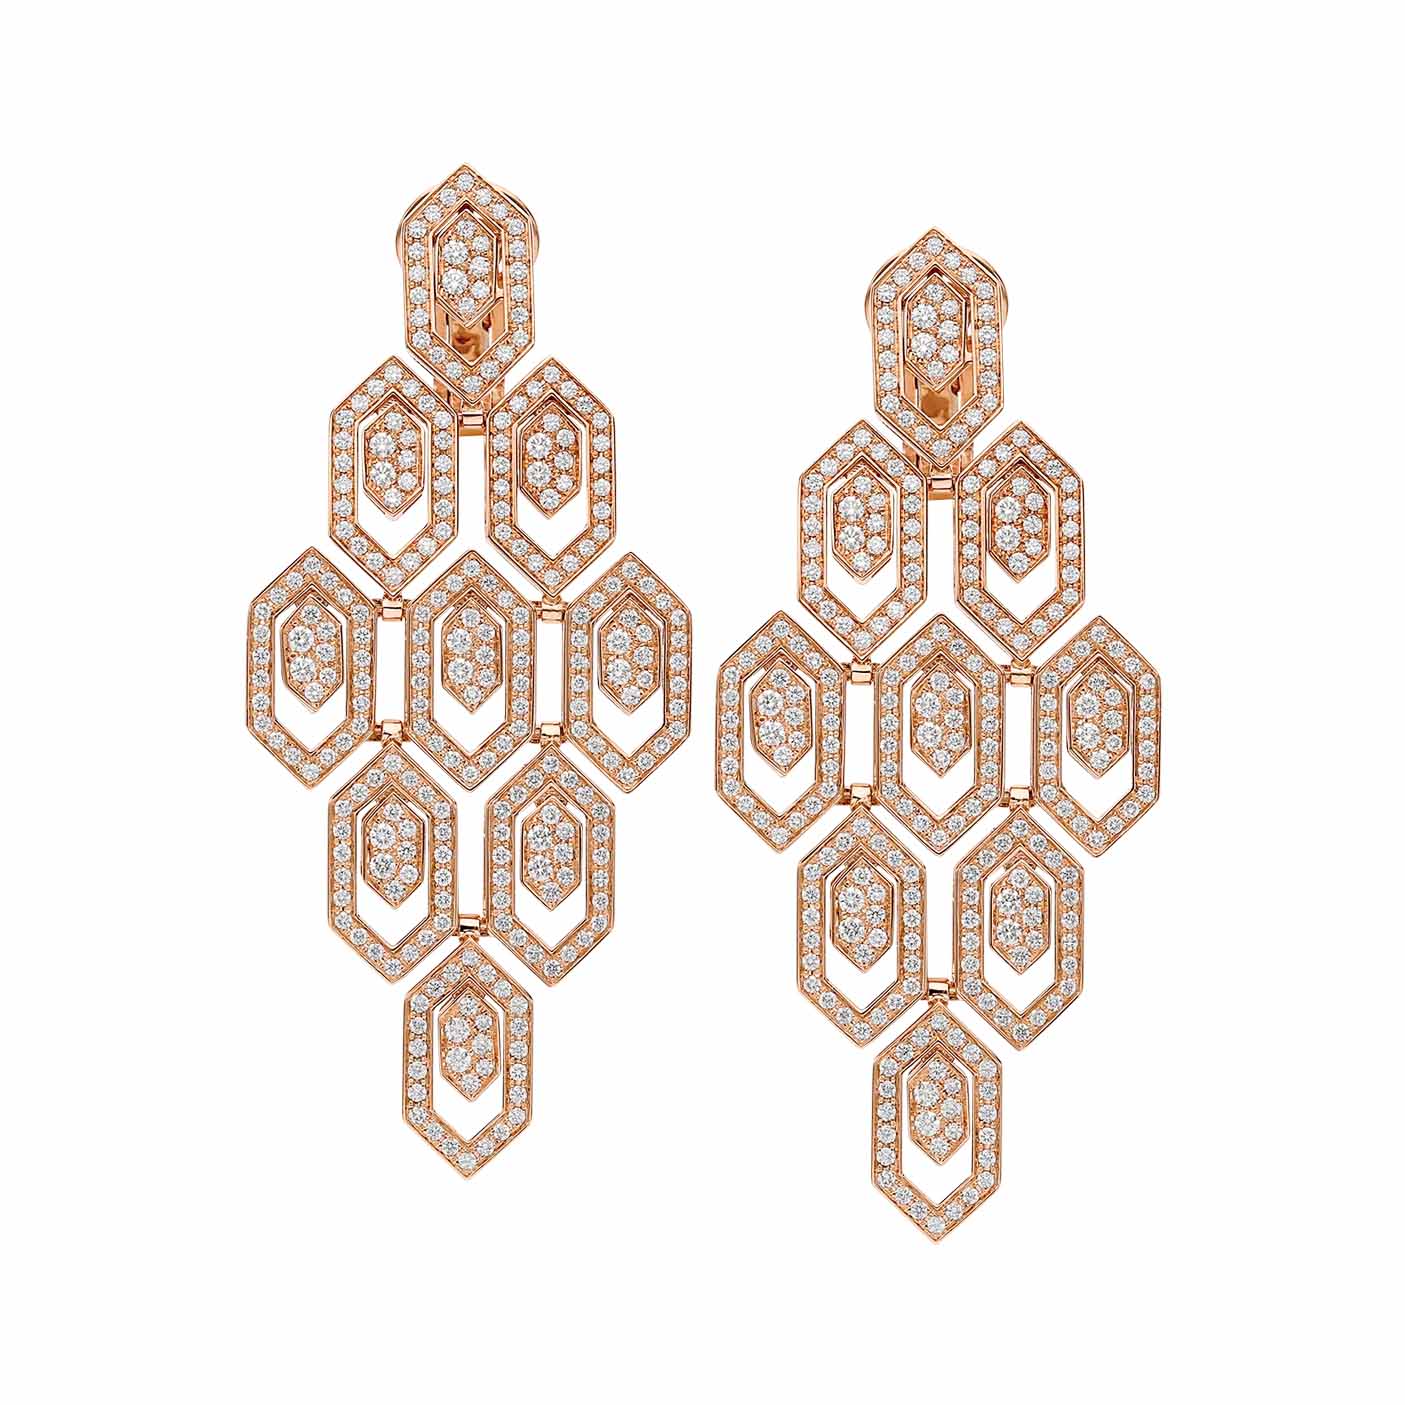 Wholesale Custom design 18k rose OEM/ODM Jewelry gold earrings set with pavé Cubic Zirconia OEM supplier